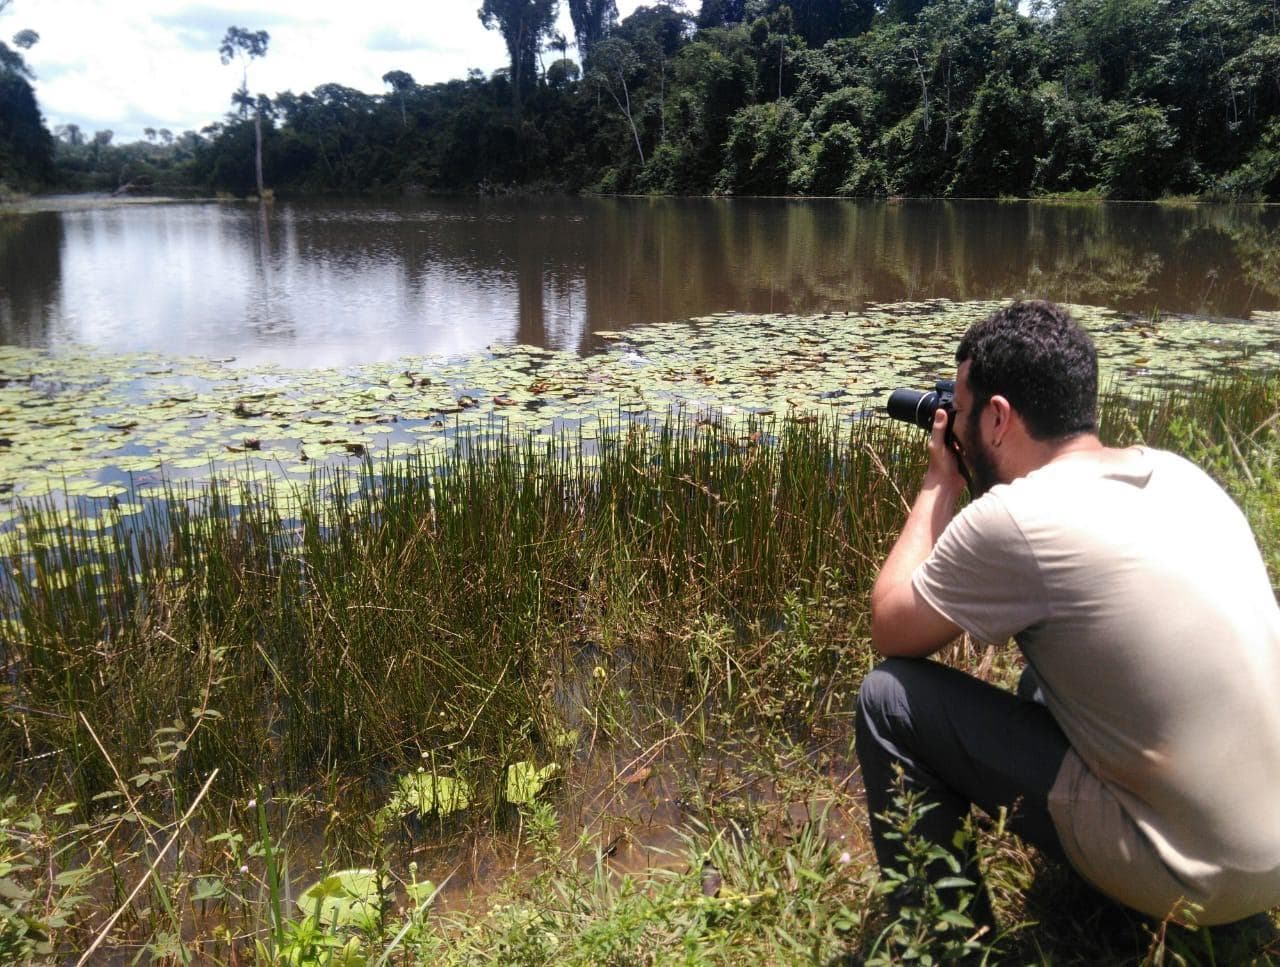 Leonardo De Sousa Miranda during field work in the Amazon